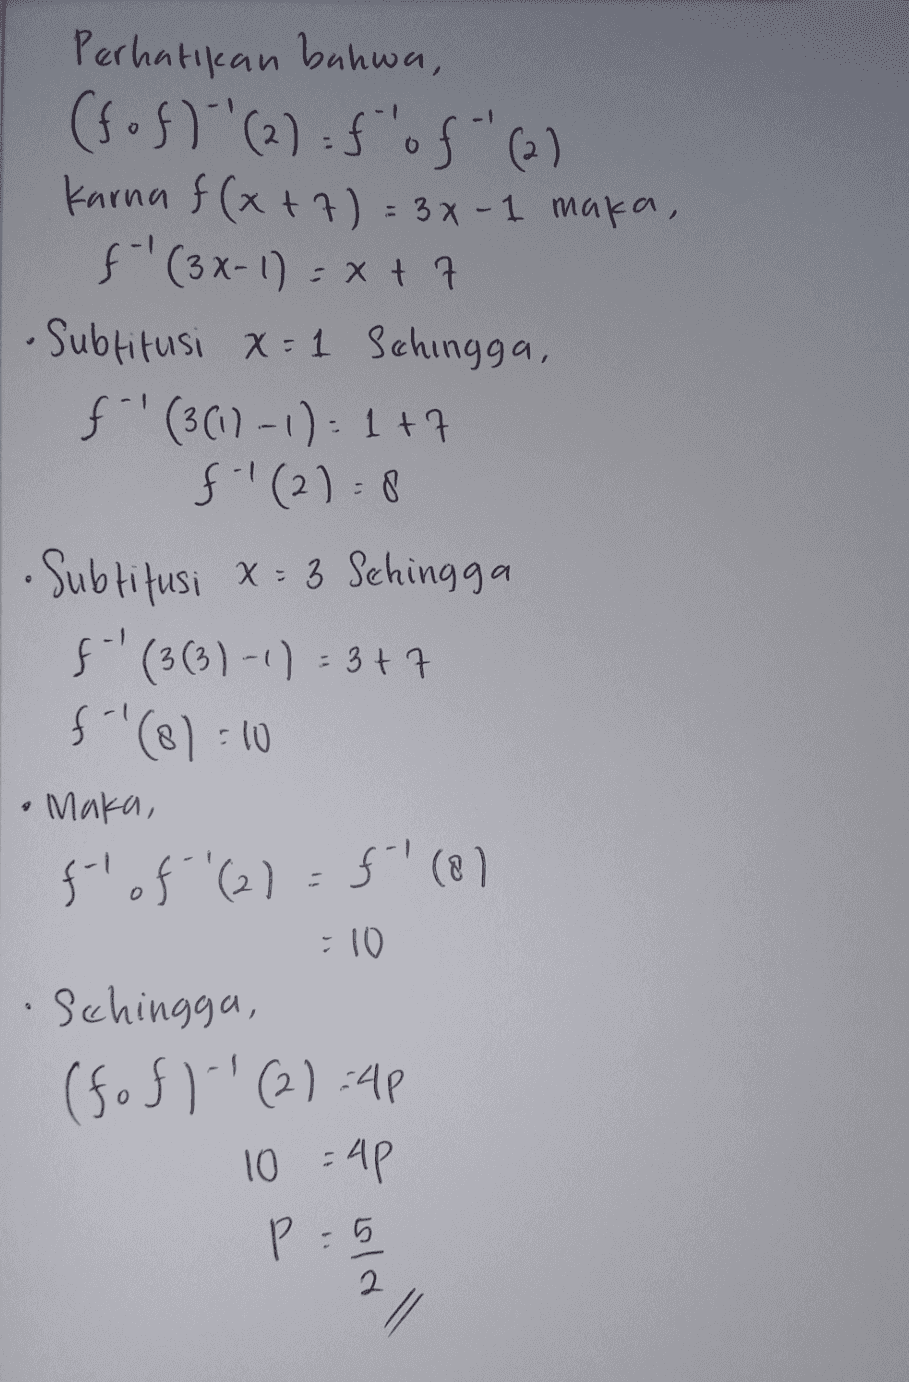 Perhatikan bahwa, (6 of}" (2) :f of" (2) Karna f (x + 7) = 3x-1 maka, f(3x-1) = x + 7 •Subtitusi x=1 Schingga, f 1 (3 (1)-1)= 1 +7 f'(2):8 • Subtitusi x = 3 Sehingga f- ' (3 (3)-1) = 3 +7 f-1(8):10 Maka, f-l of '(2) = f (8) = 10 schingga, (fofl' (2):41 10:42 2 P : 5 